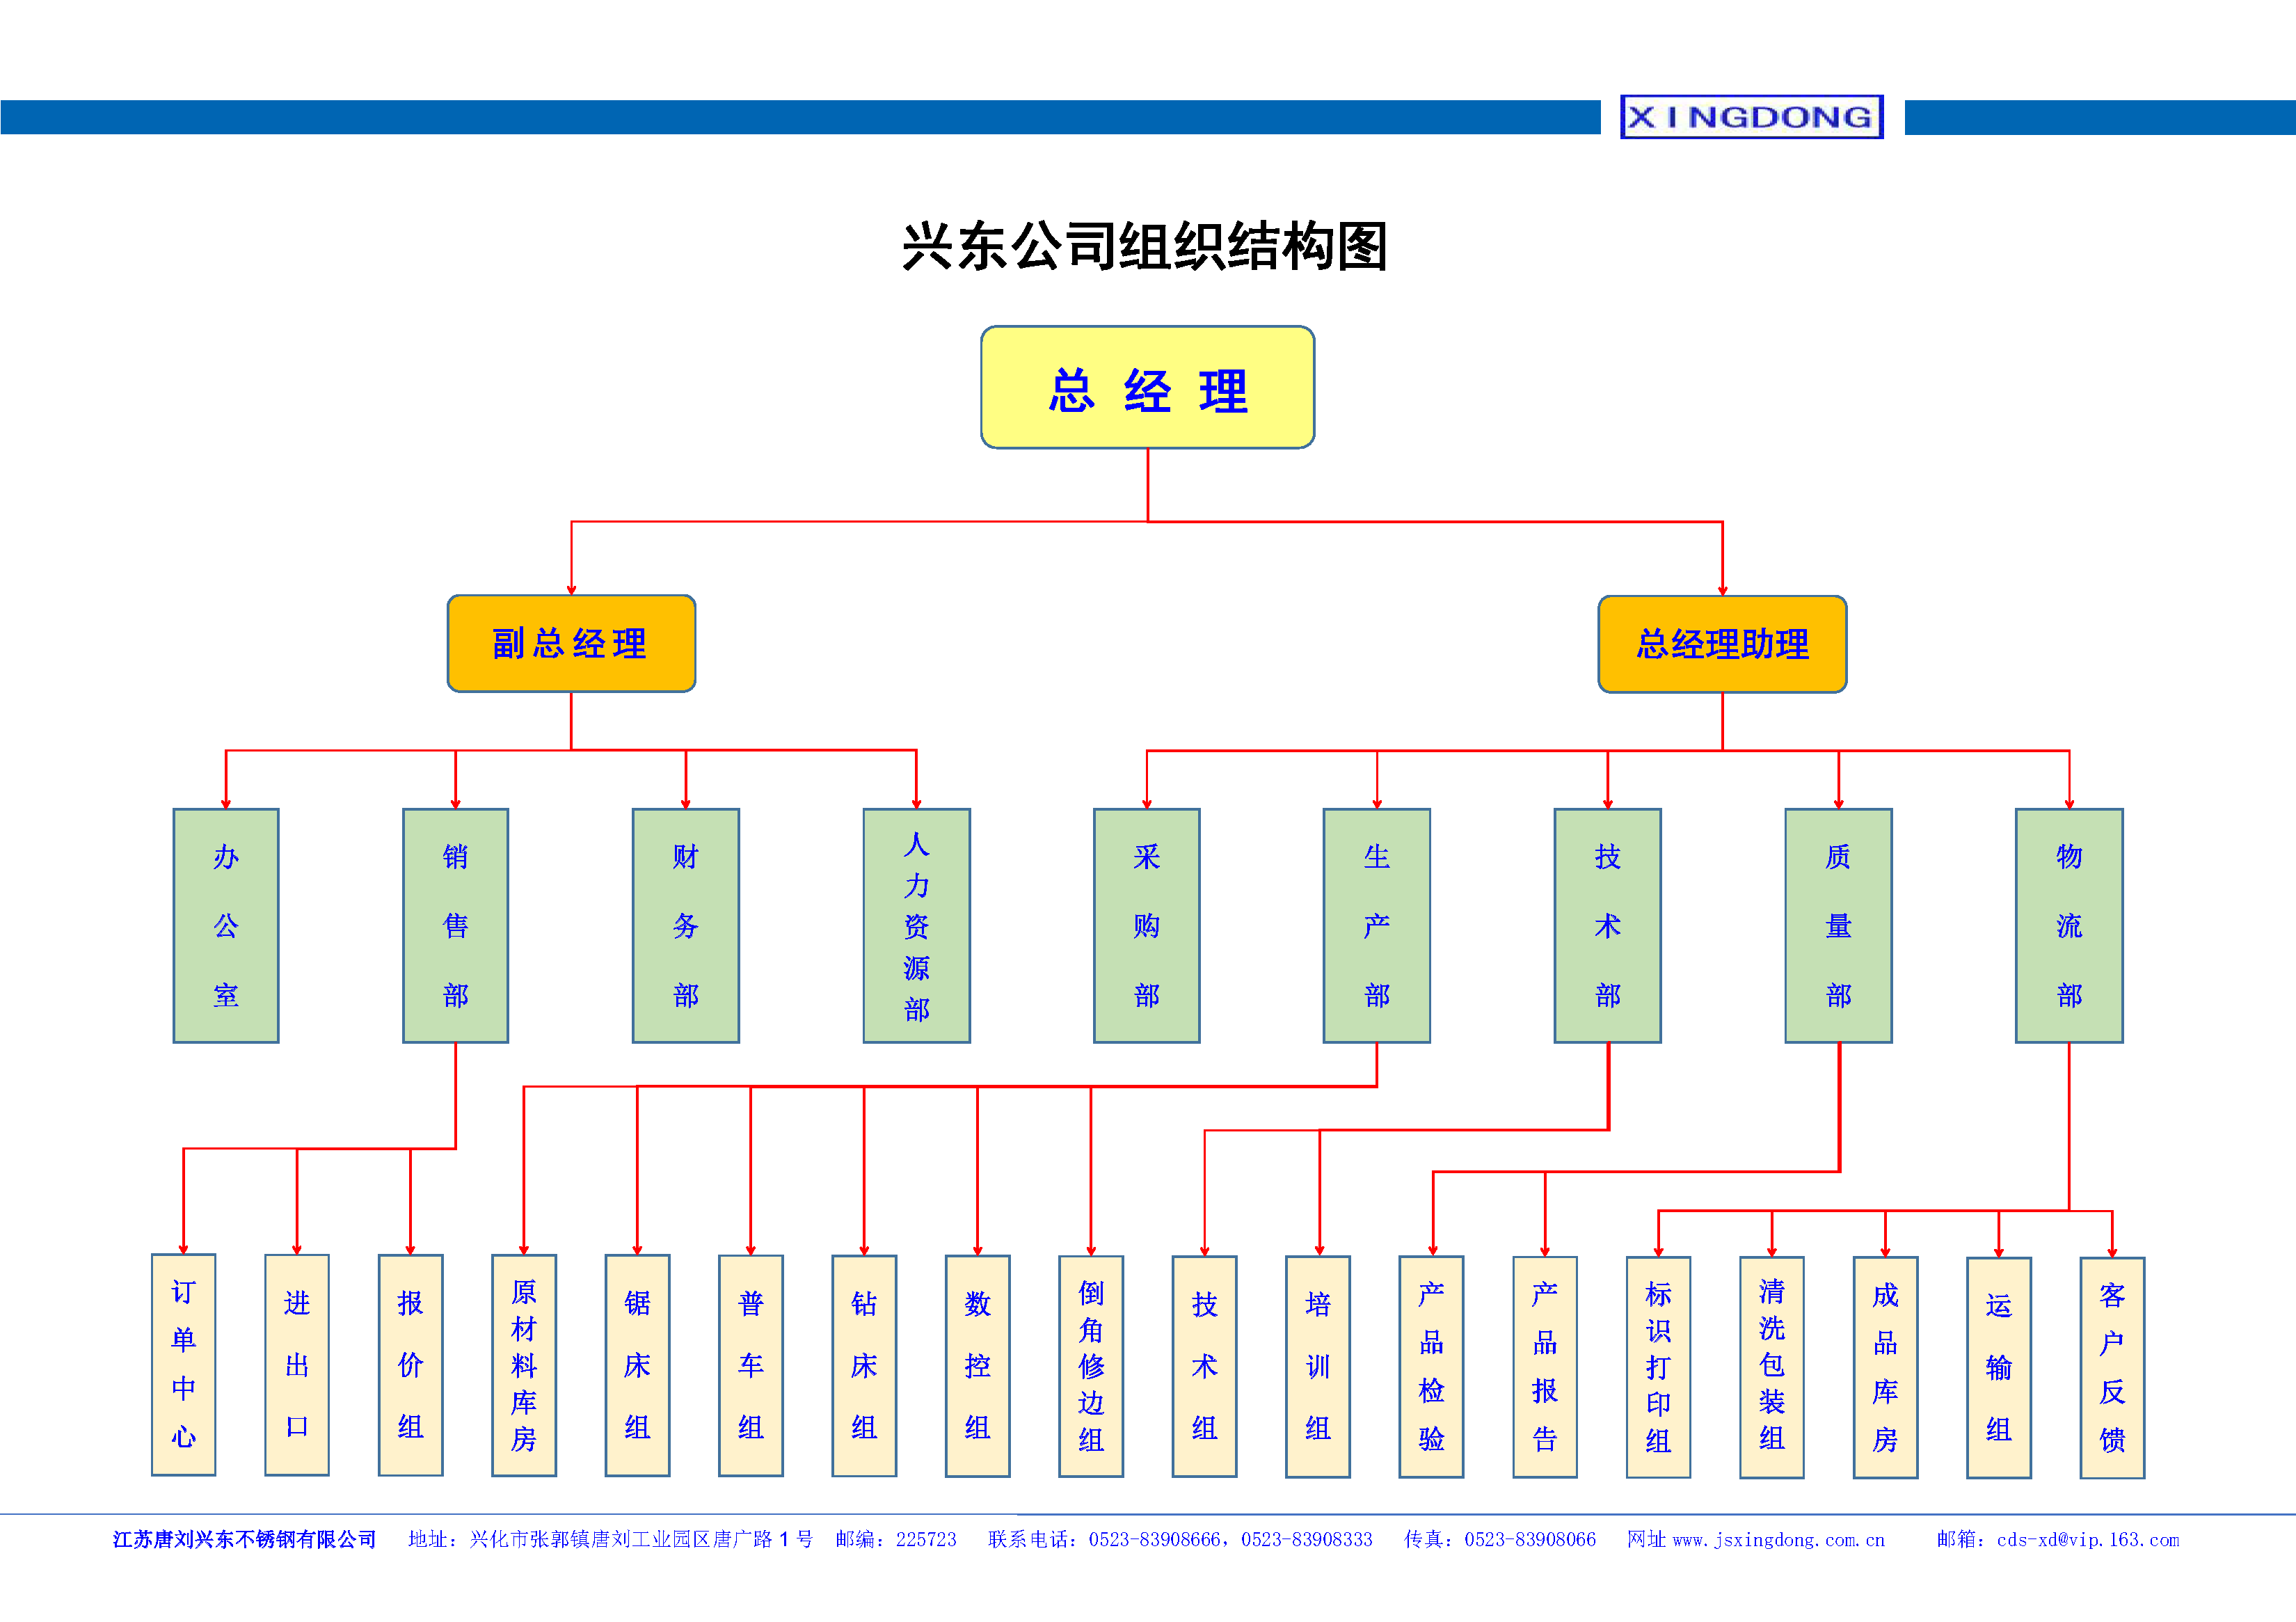 兴东组织结构图- 2021-1-1.png